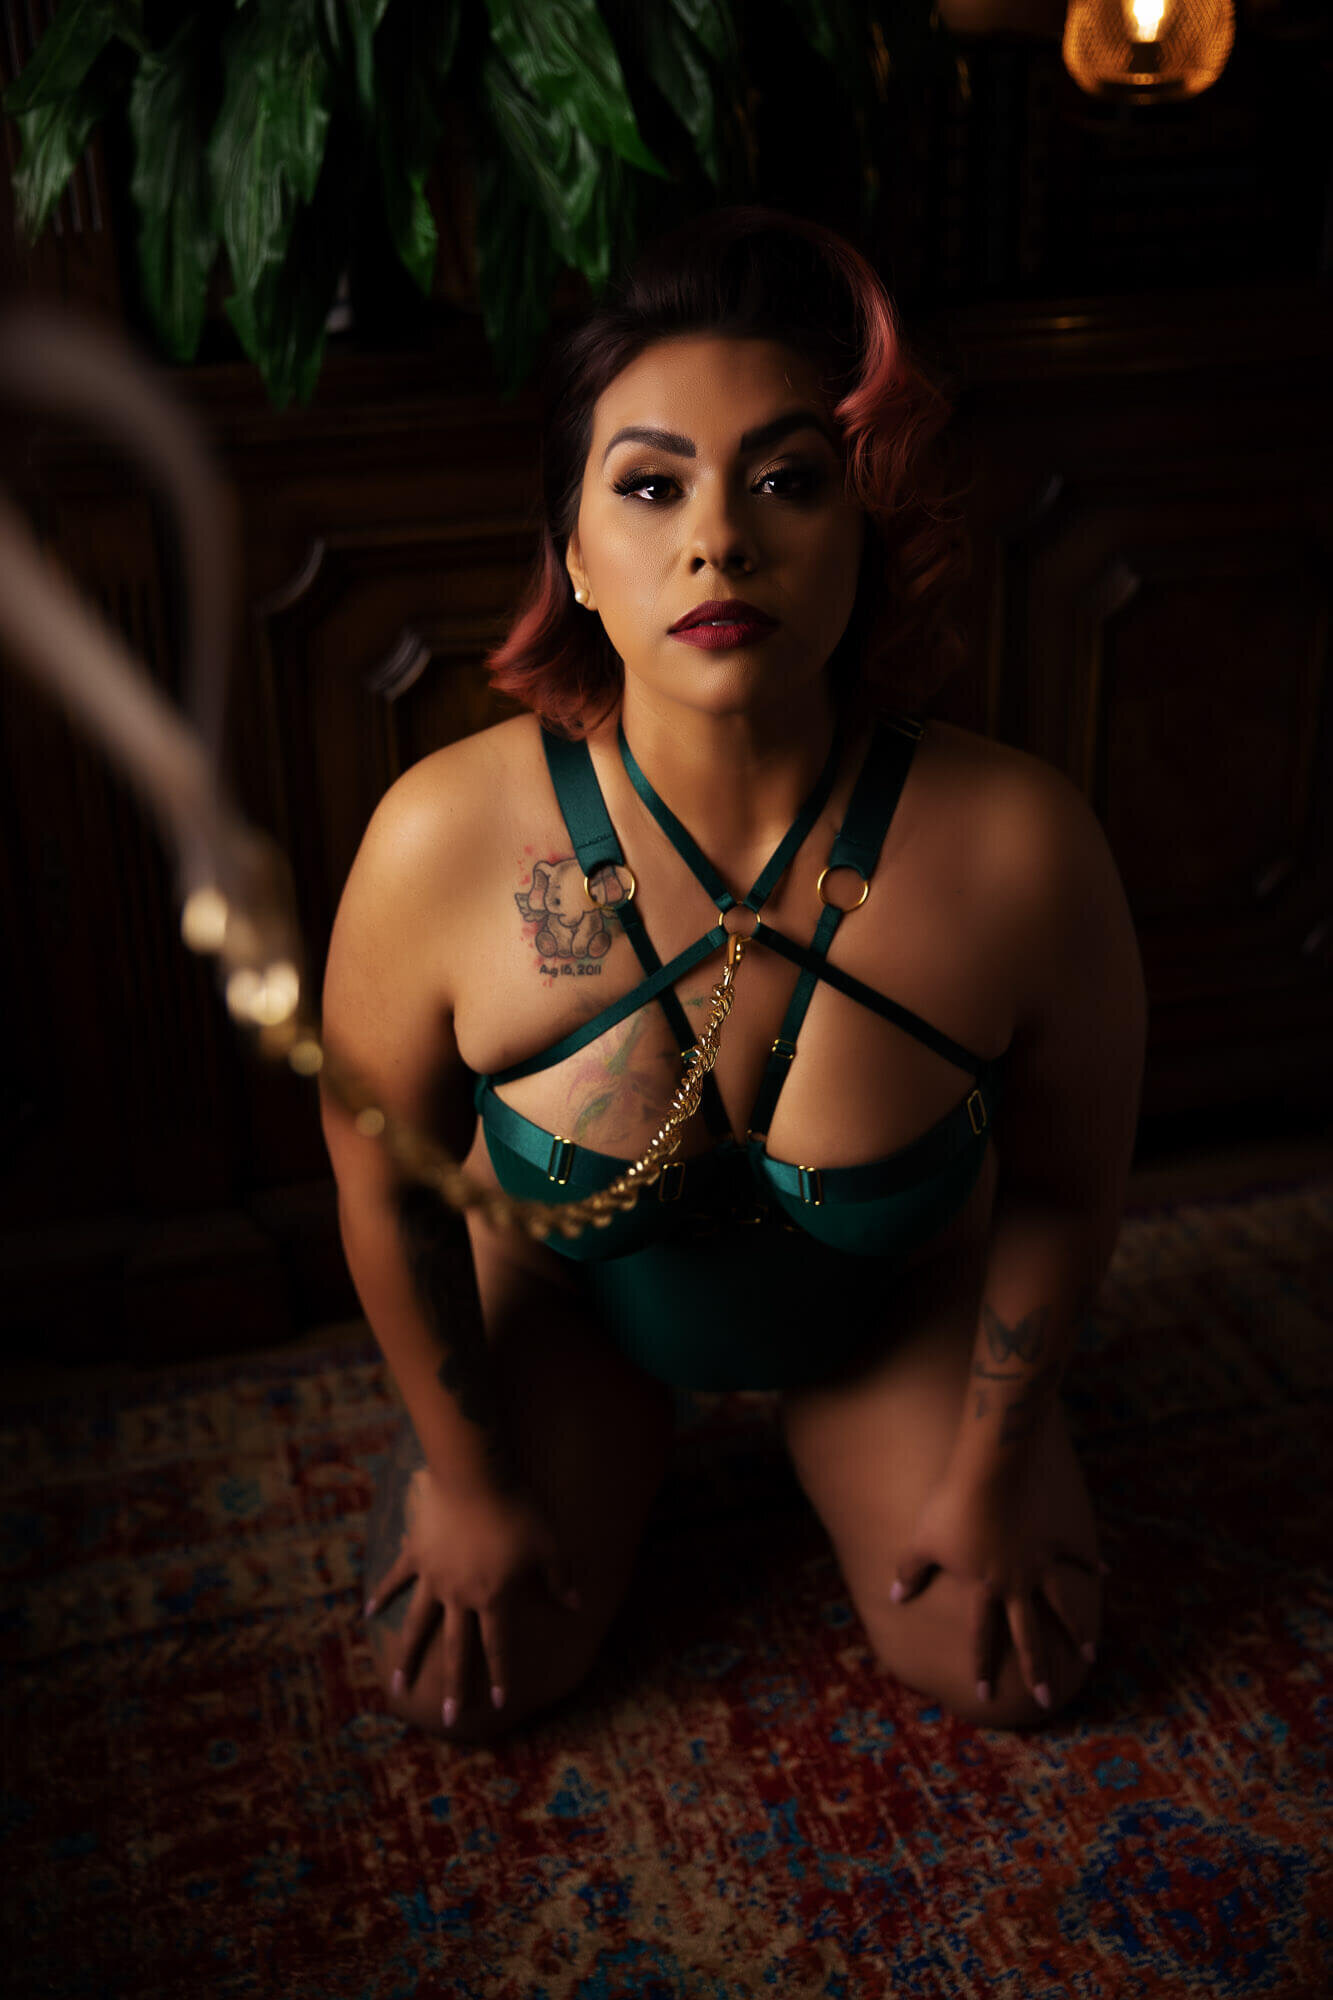 Intimate bondage-inspired boudoir shots revealing your inner strength and sensuality in Scottsdale, Arizona